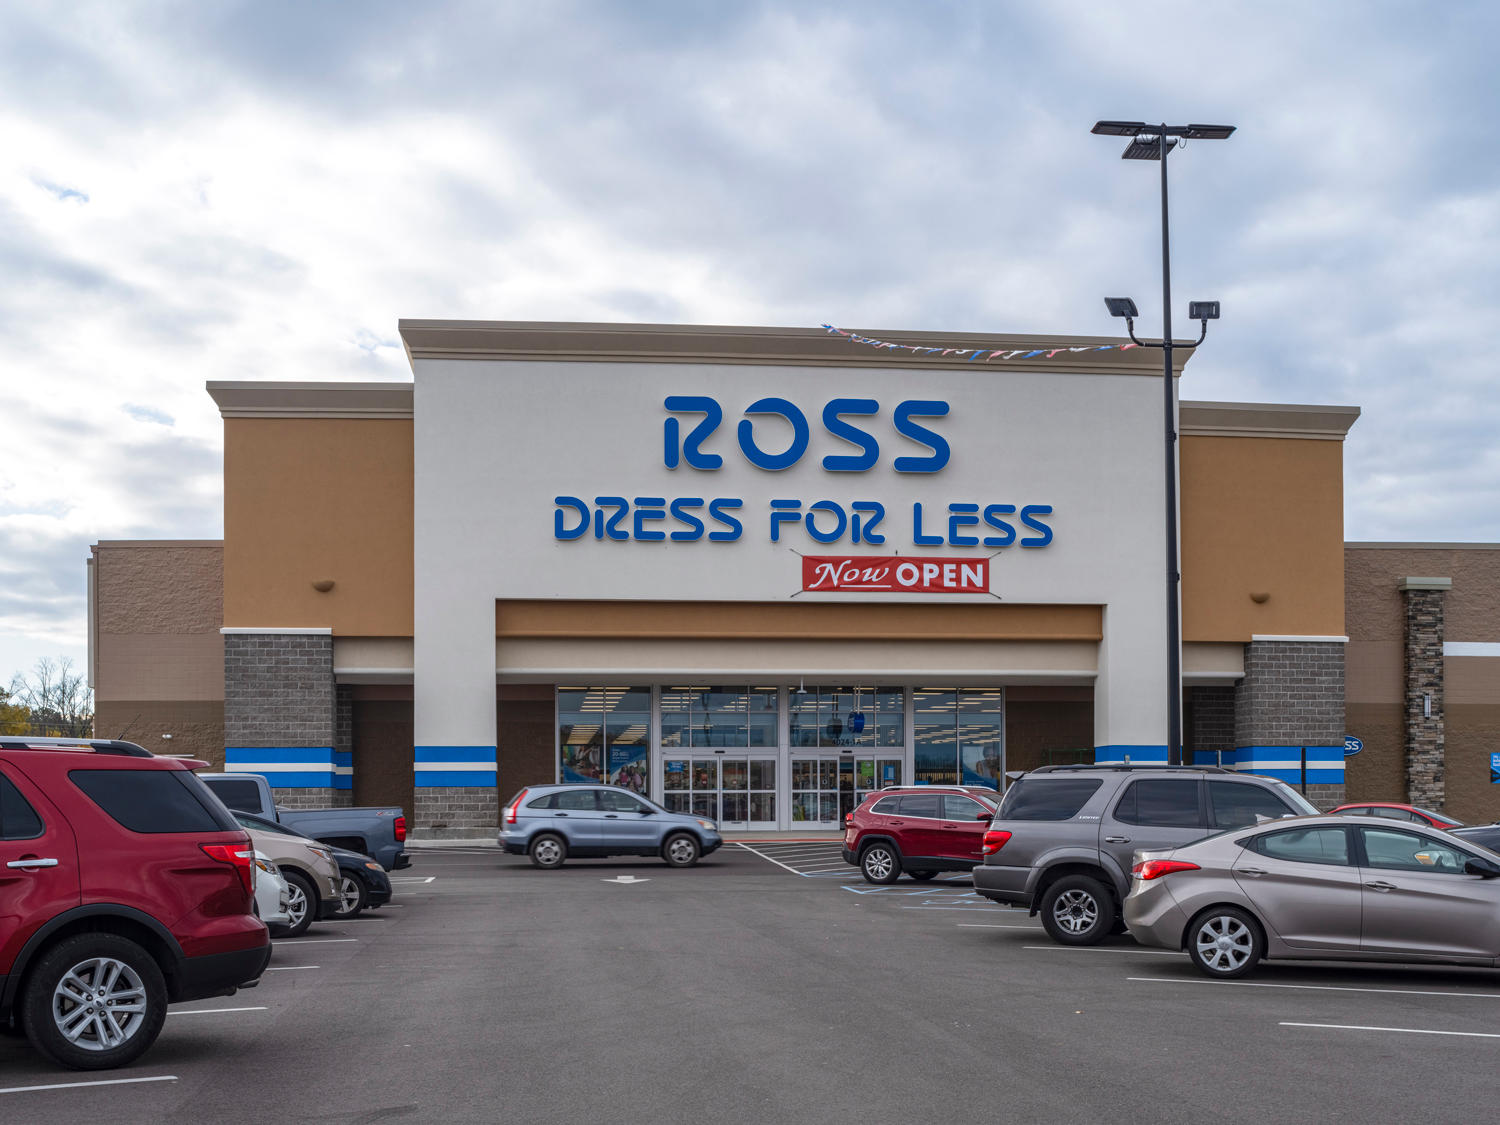 Ross Dress For Less at Market Centre Shopping Center